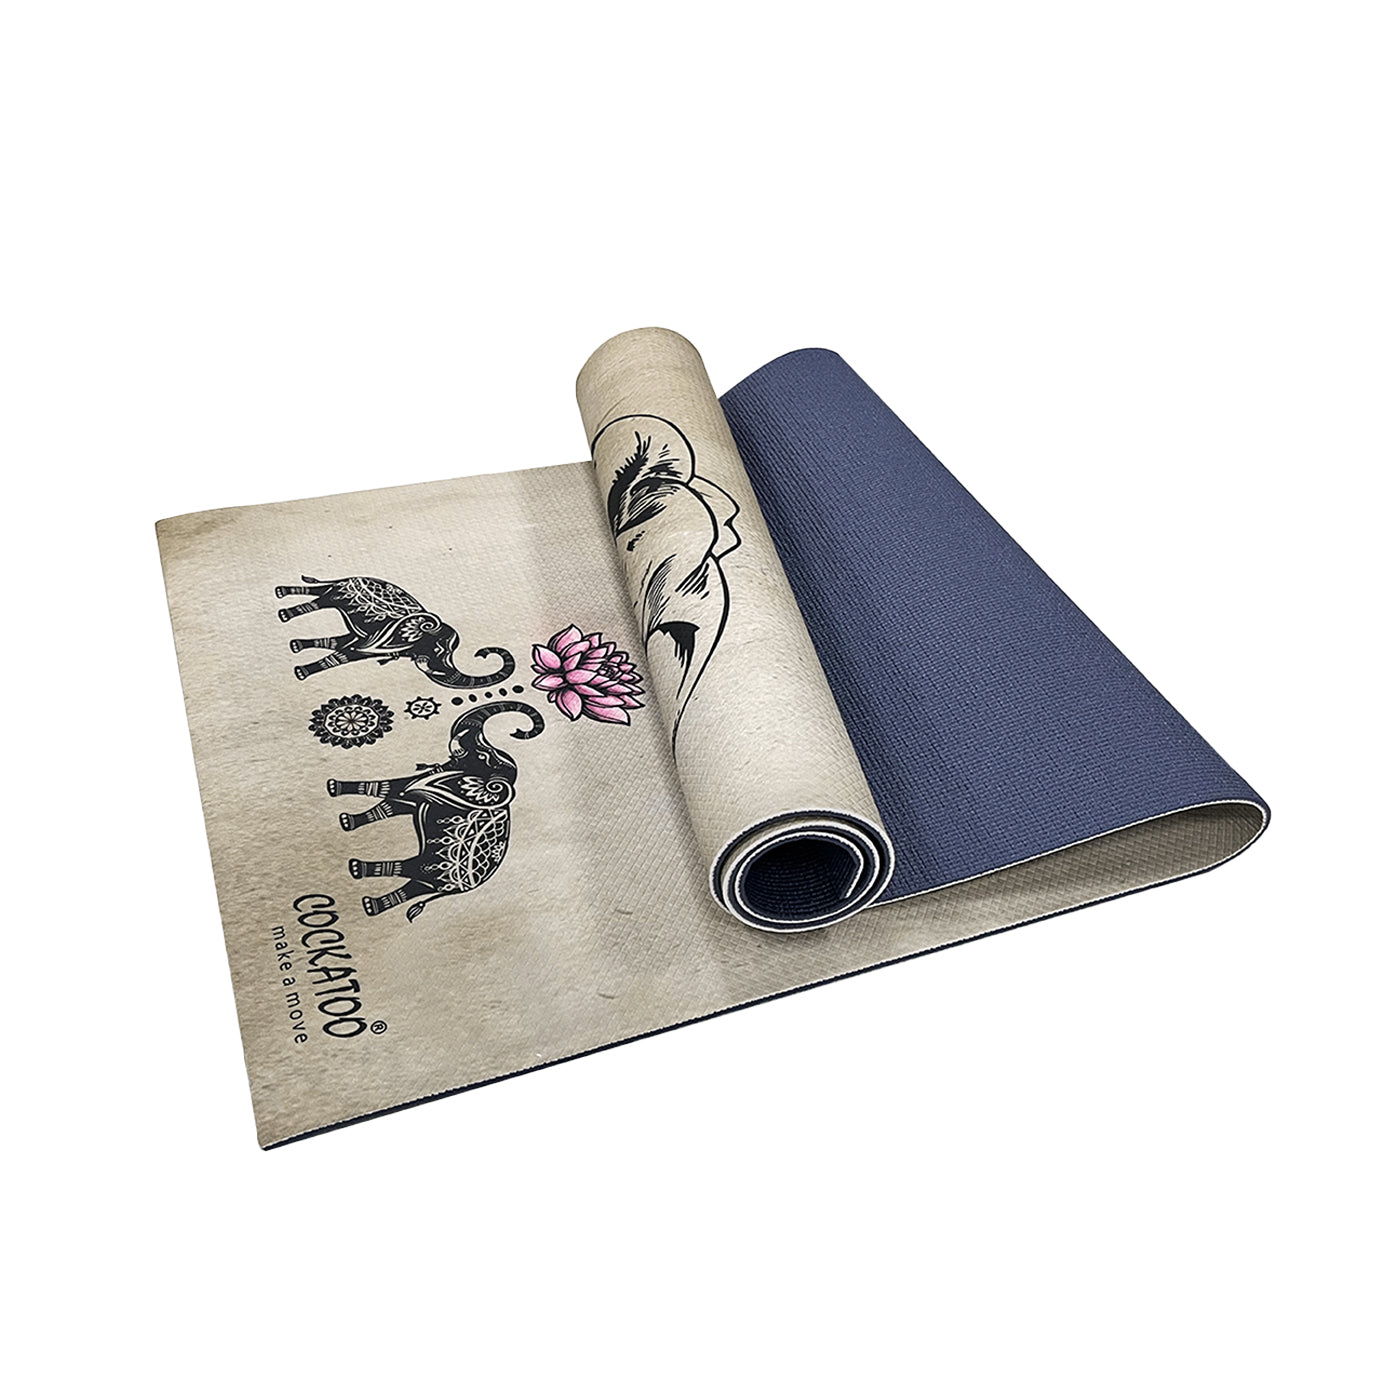 Cockatoo Printed Yoga Mat - 5mm Anti-Slip PVC Exercise Mat with Carryi